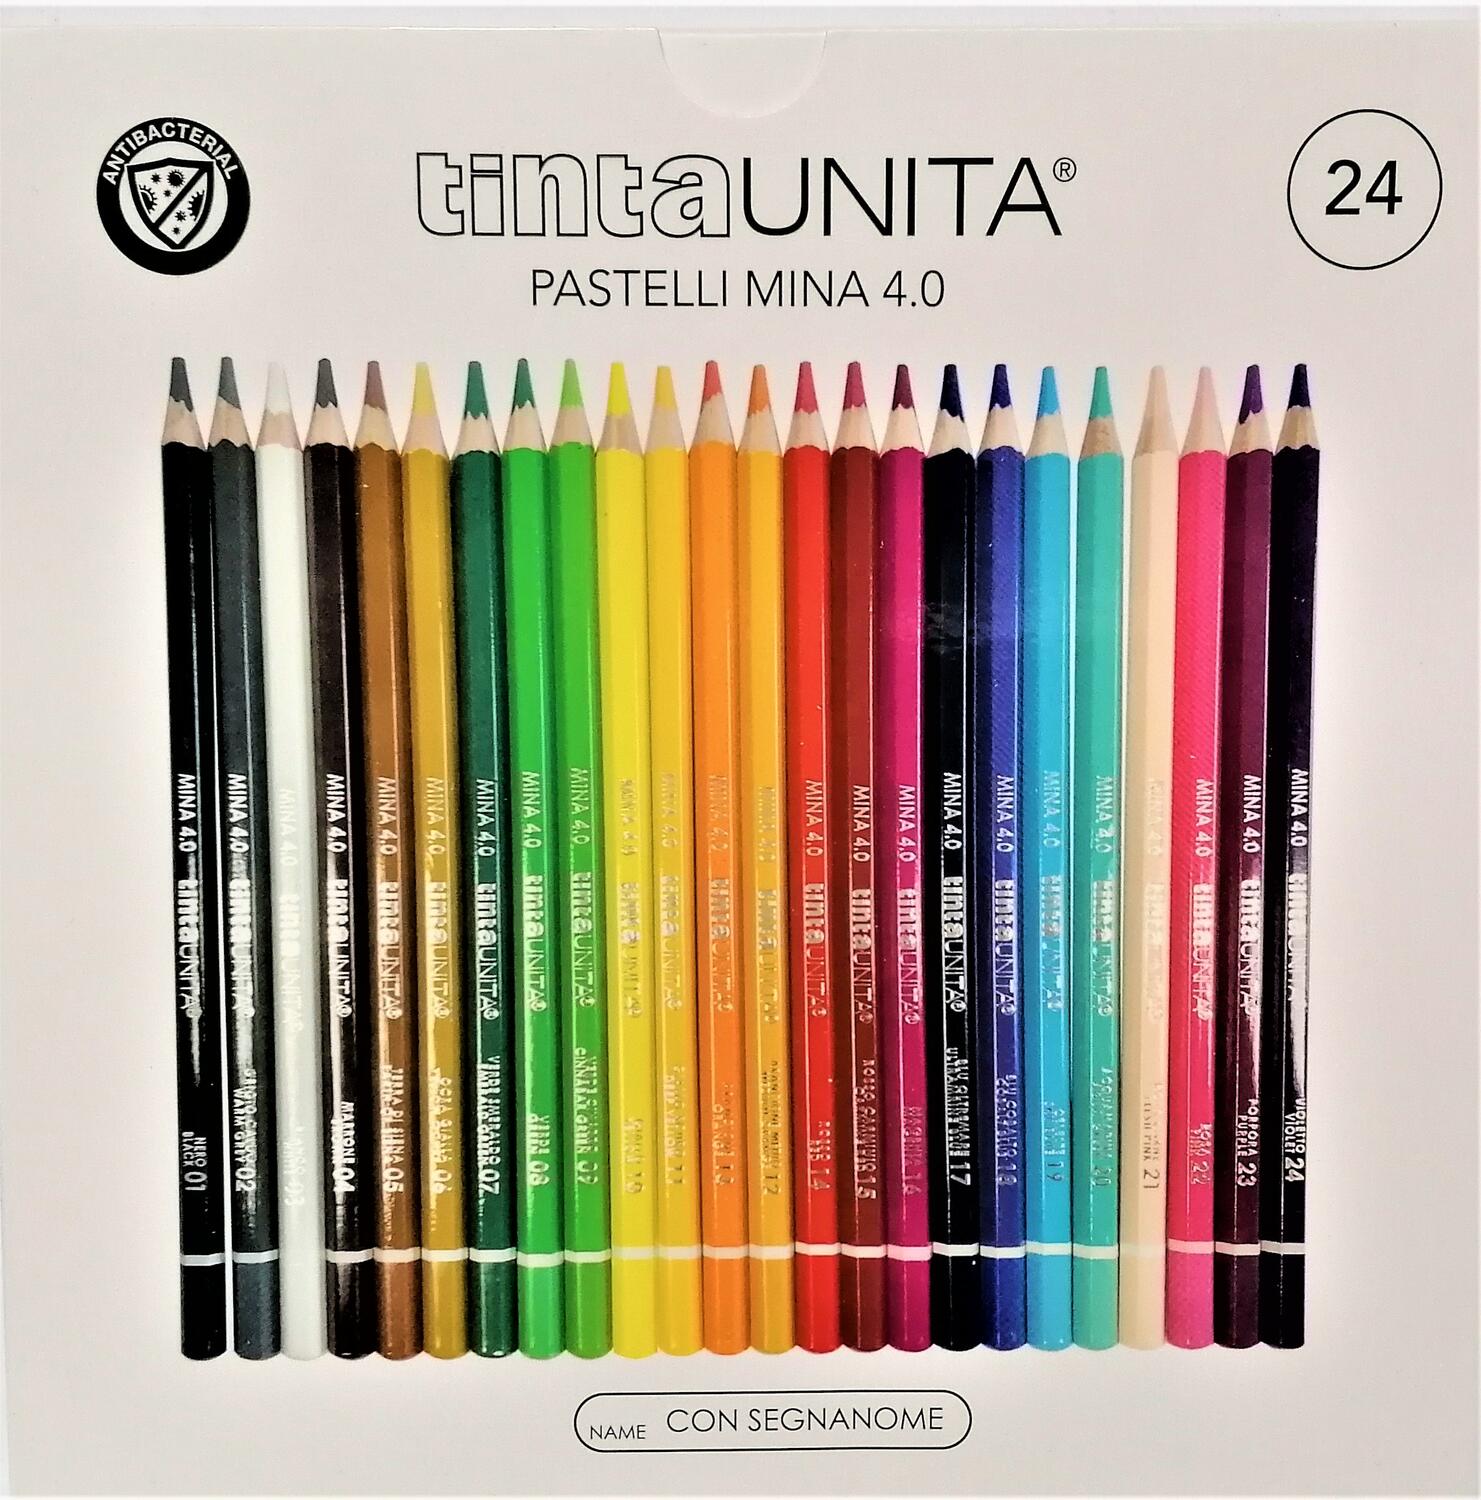 Pastelli - Tinta Unita - Astuccio maxi una zip con 110 colori -  Cartolibreria Gianna